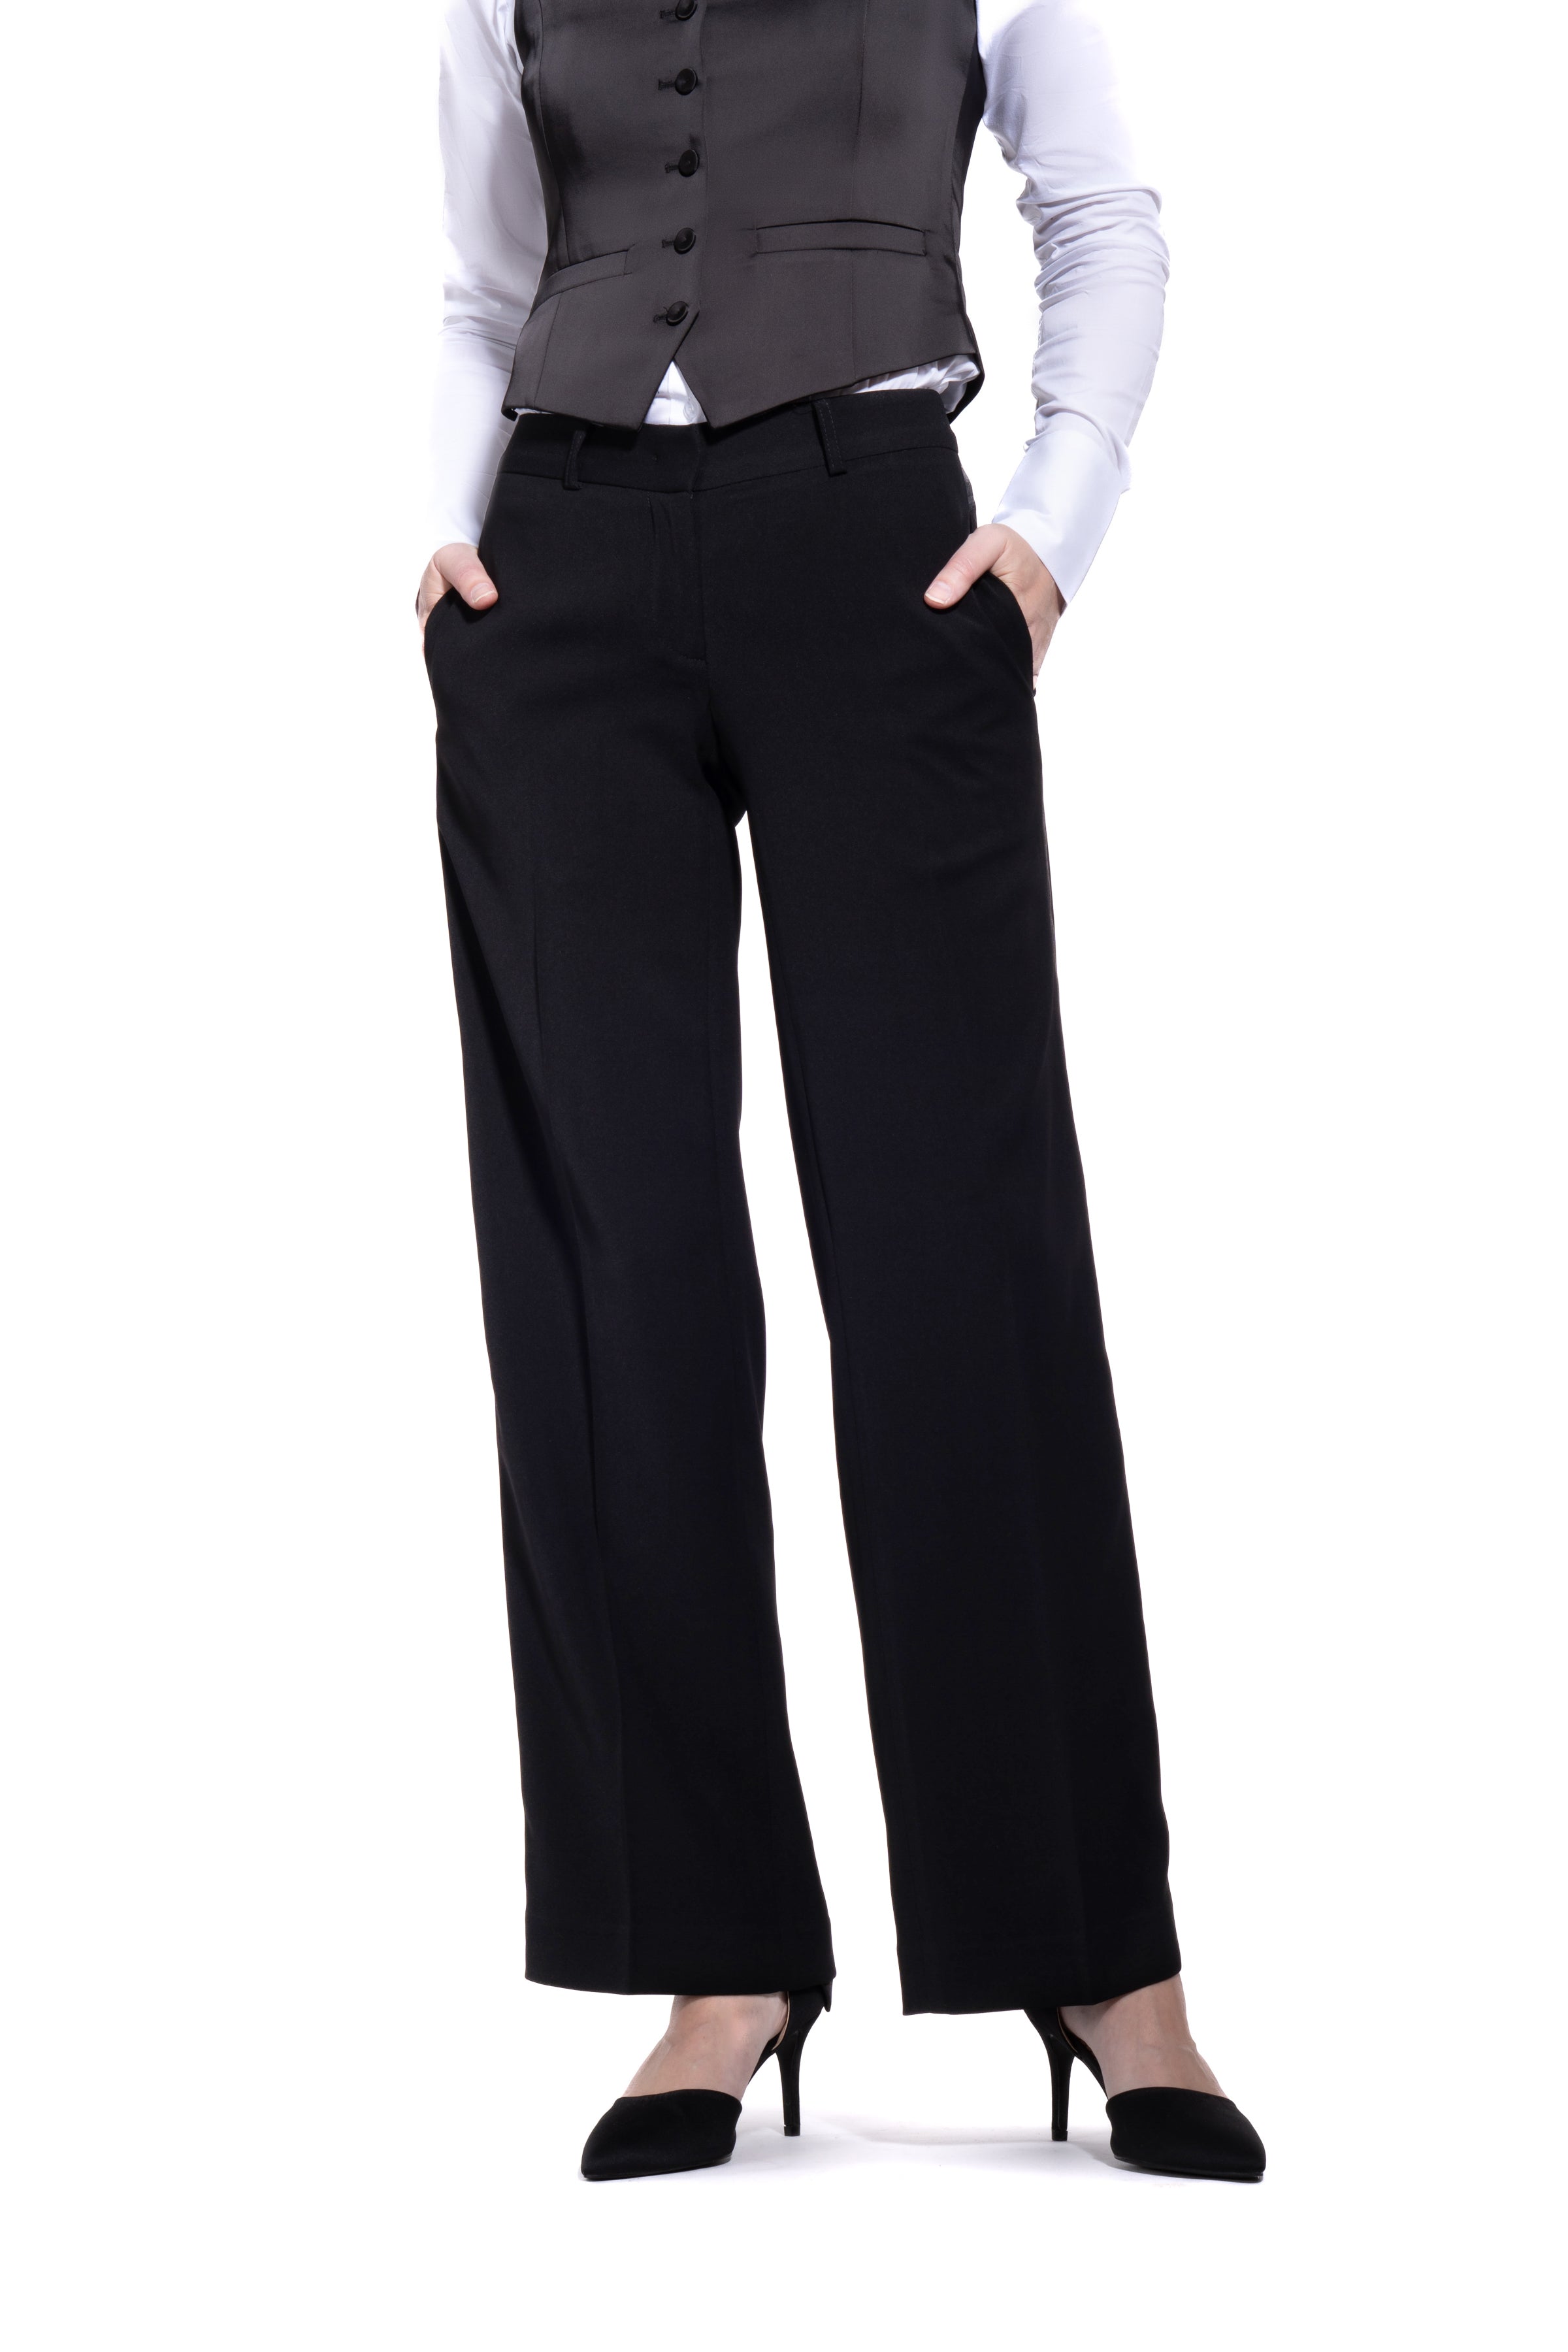 Neil Allyn Women's Pleated Front Tuxedo Trouser 3036PL-2 Black at Amazon  Women's Clothing store